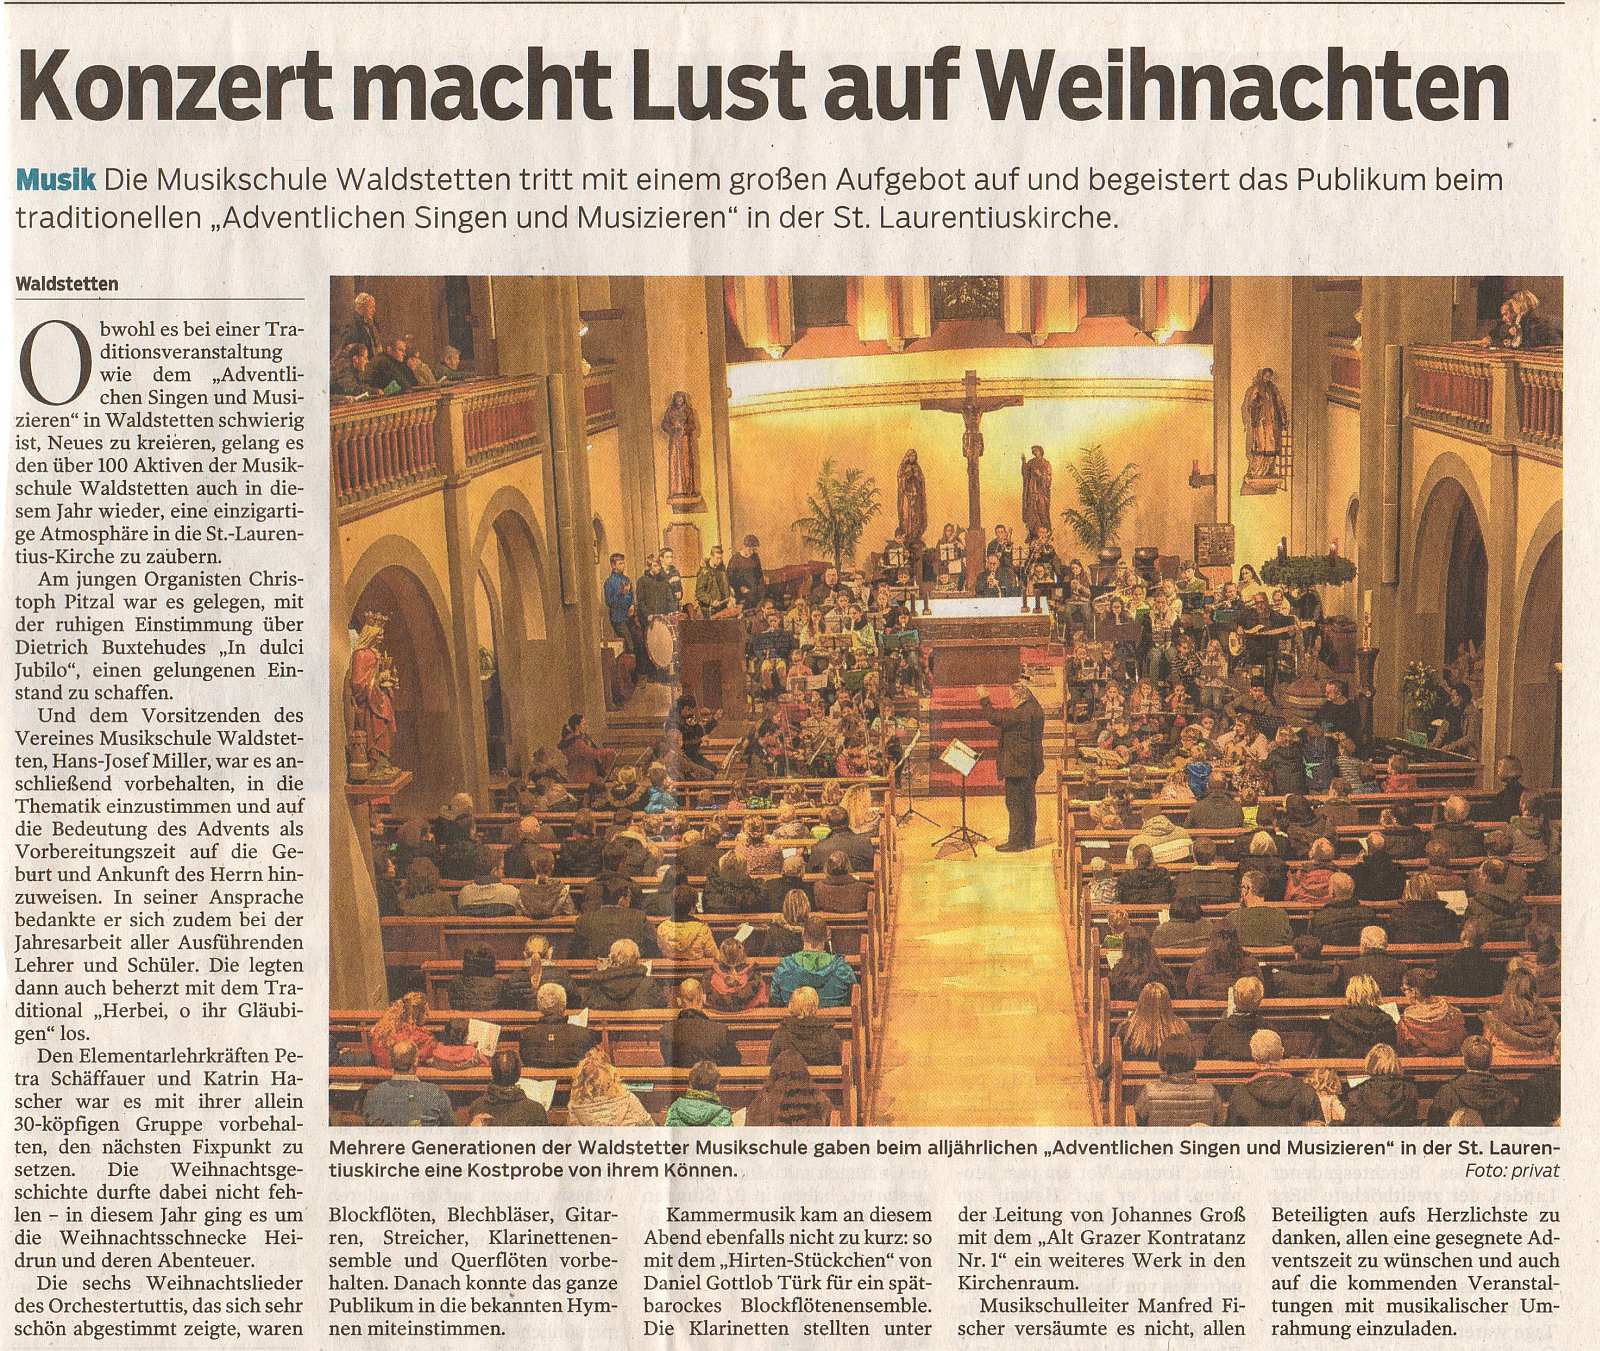  Presseartikel, Gmünder Tagespost, 17.12.2019 